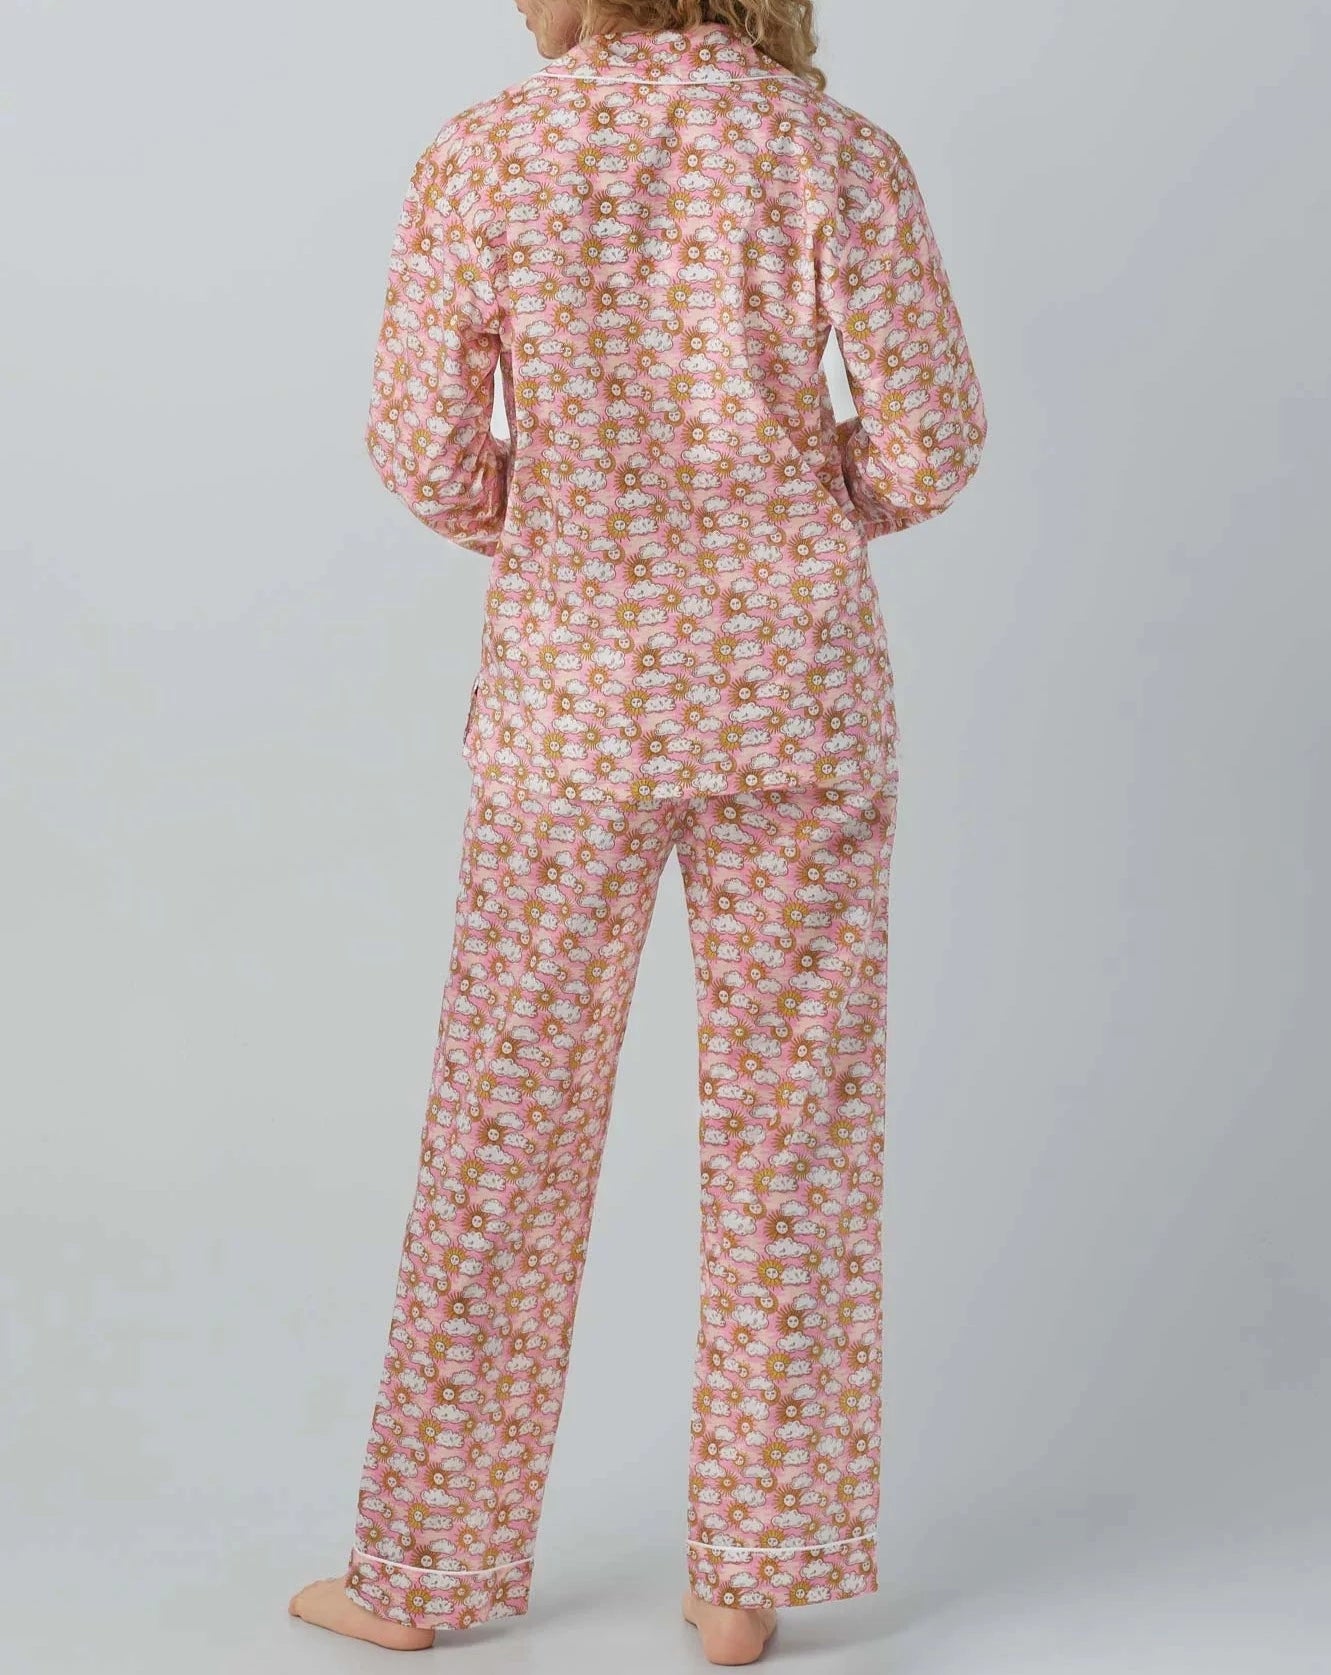 Follow The Sun Cotton PJ Set Made With Liberty Fabric - Beestung Lingerie